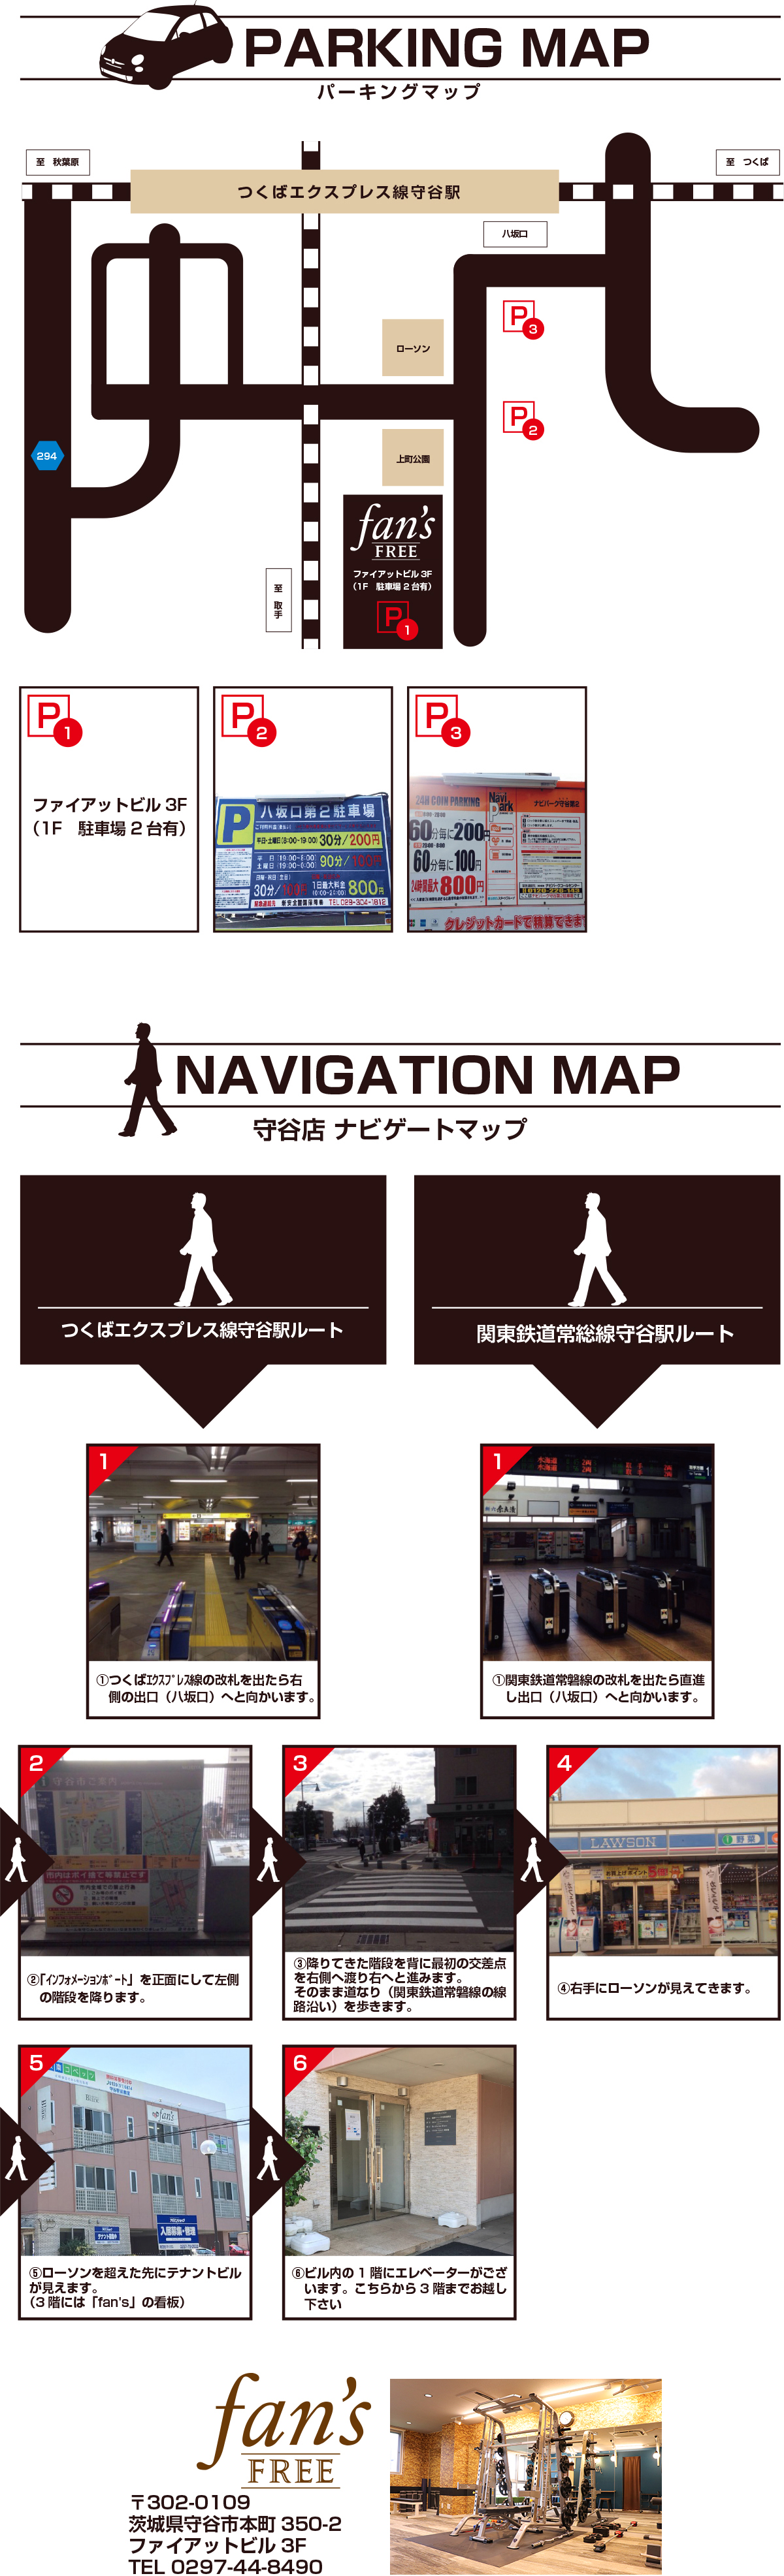 fan's FREE 守谷店パーキングマップ